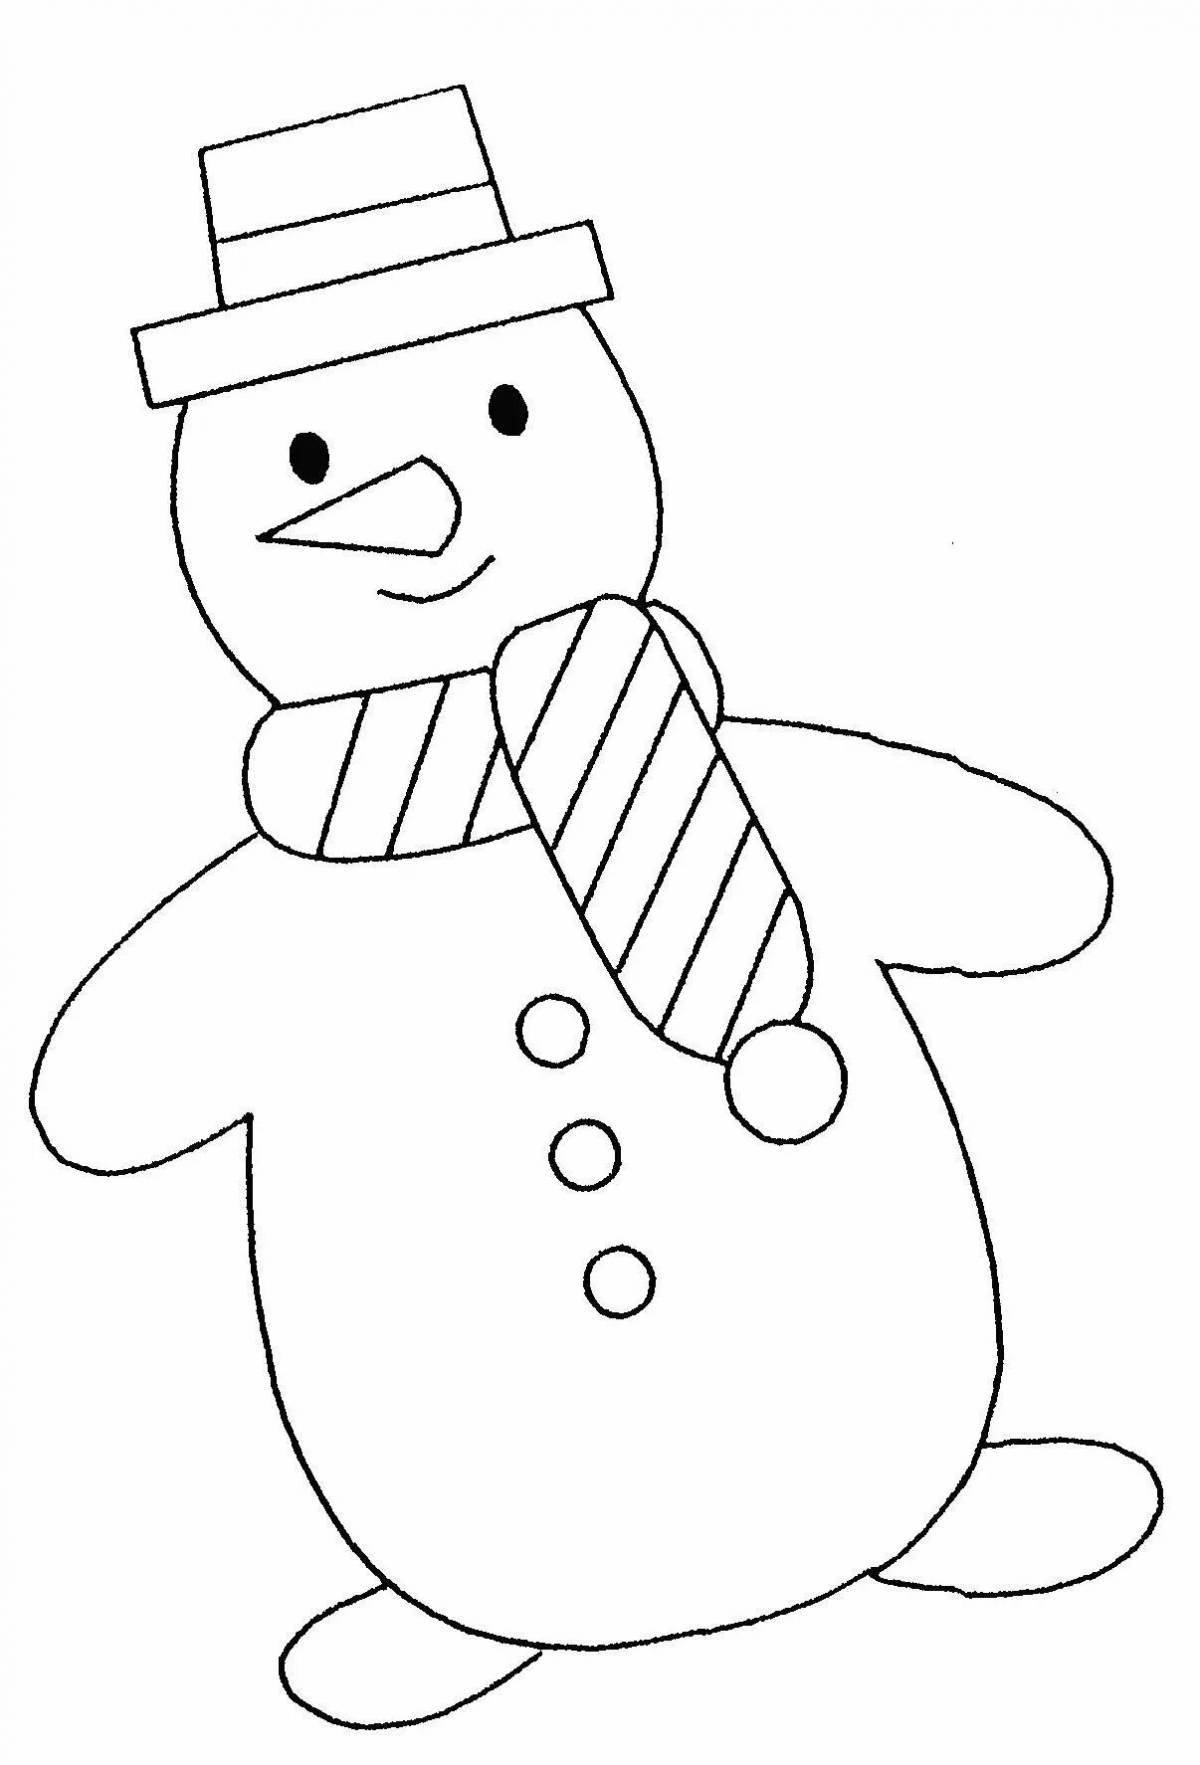 Завораживающий рисунок снеговика для детей